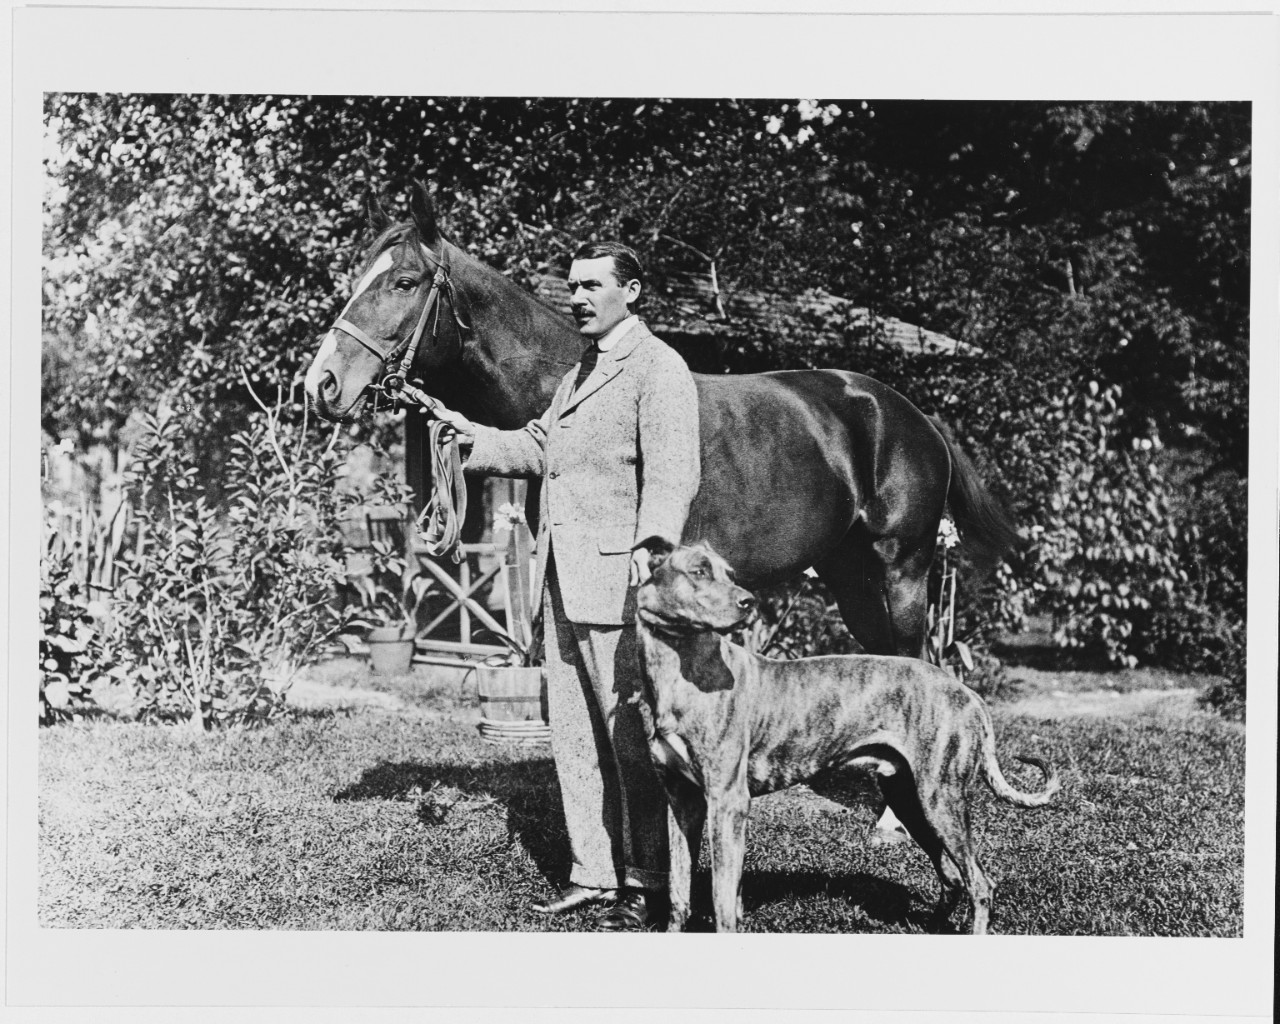 Captain William V. Pratt, USN, at home, with pet dog and a horse, circa 1920.